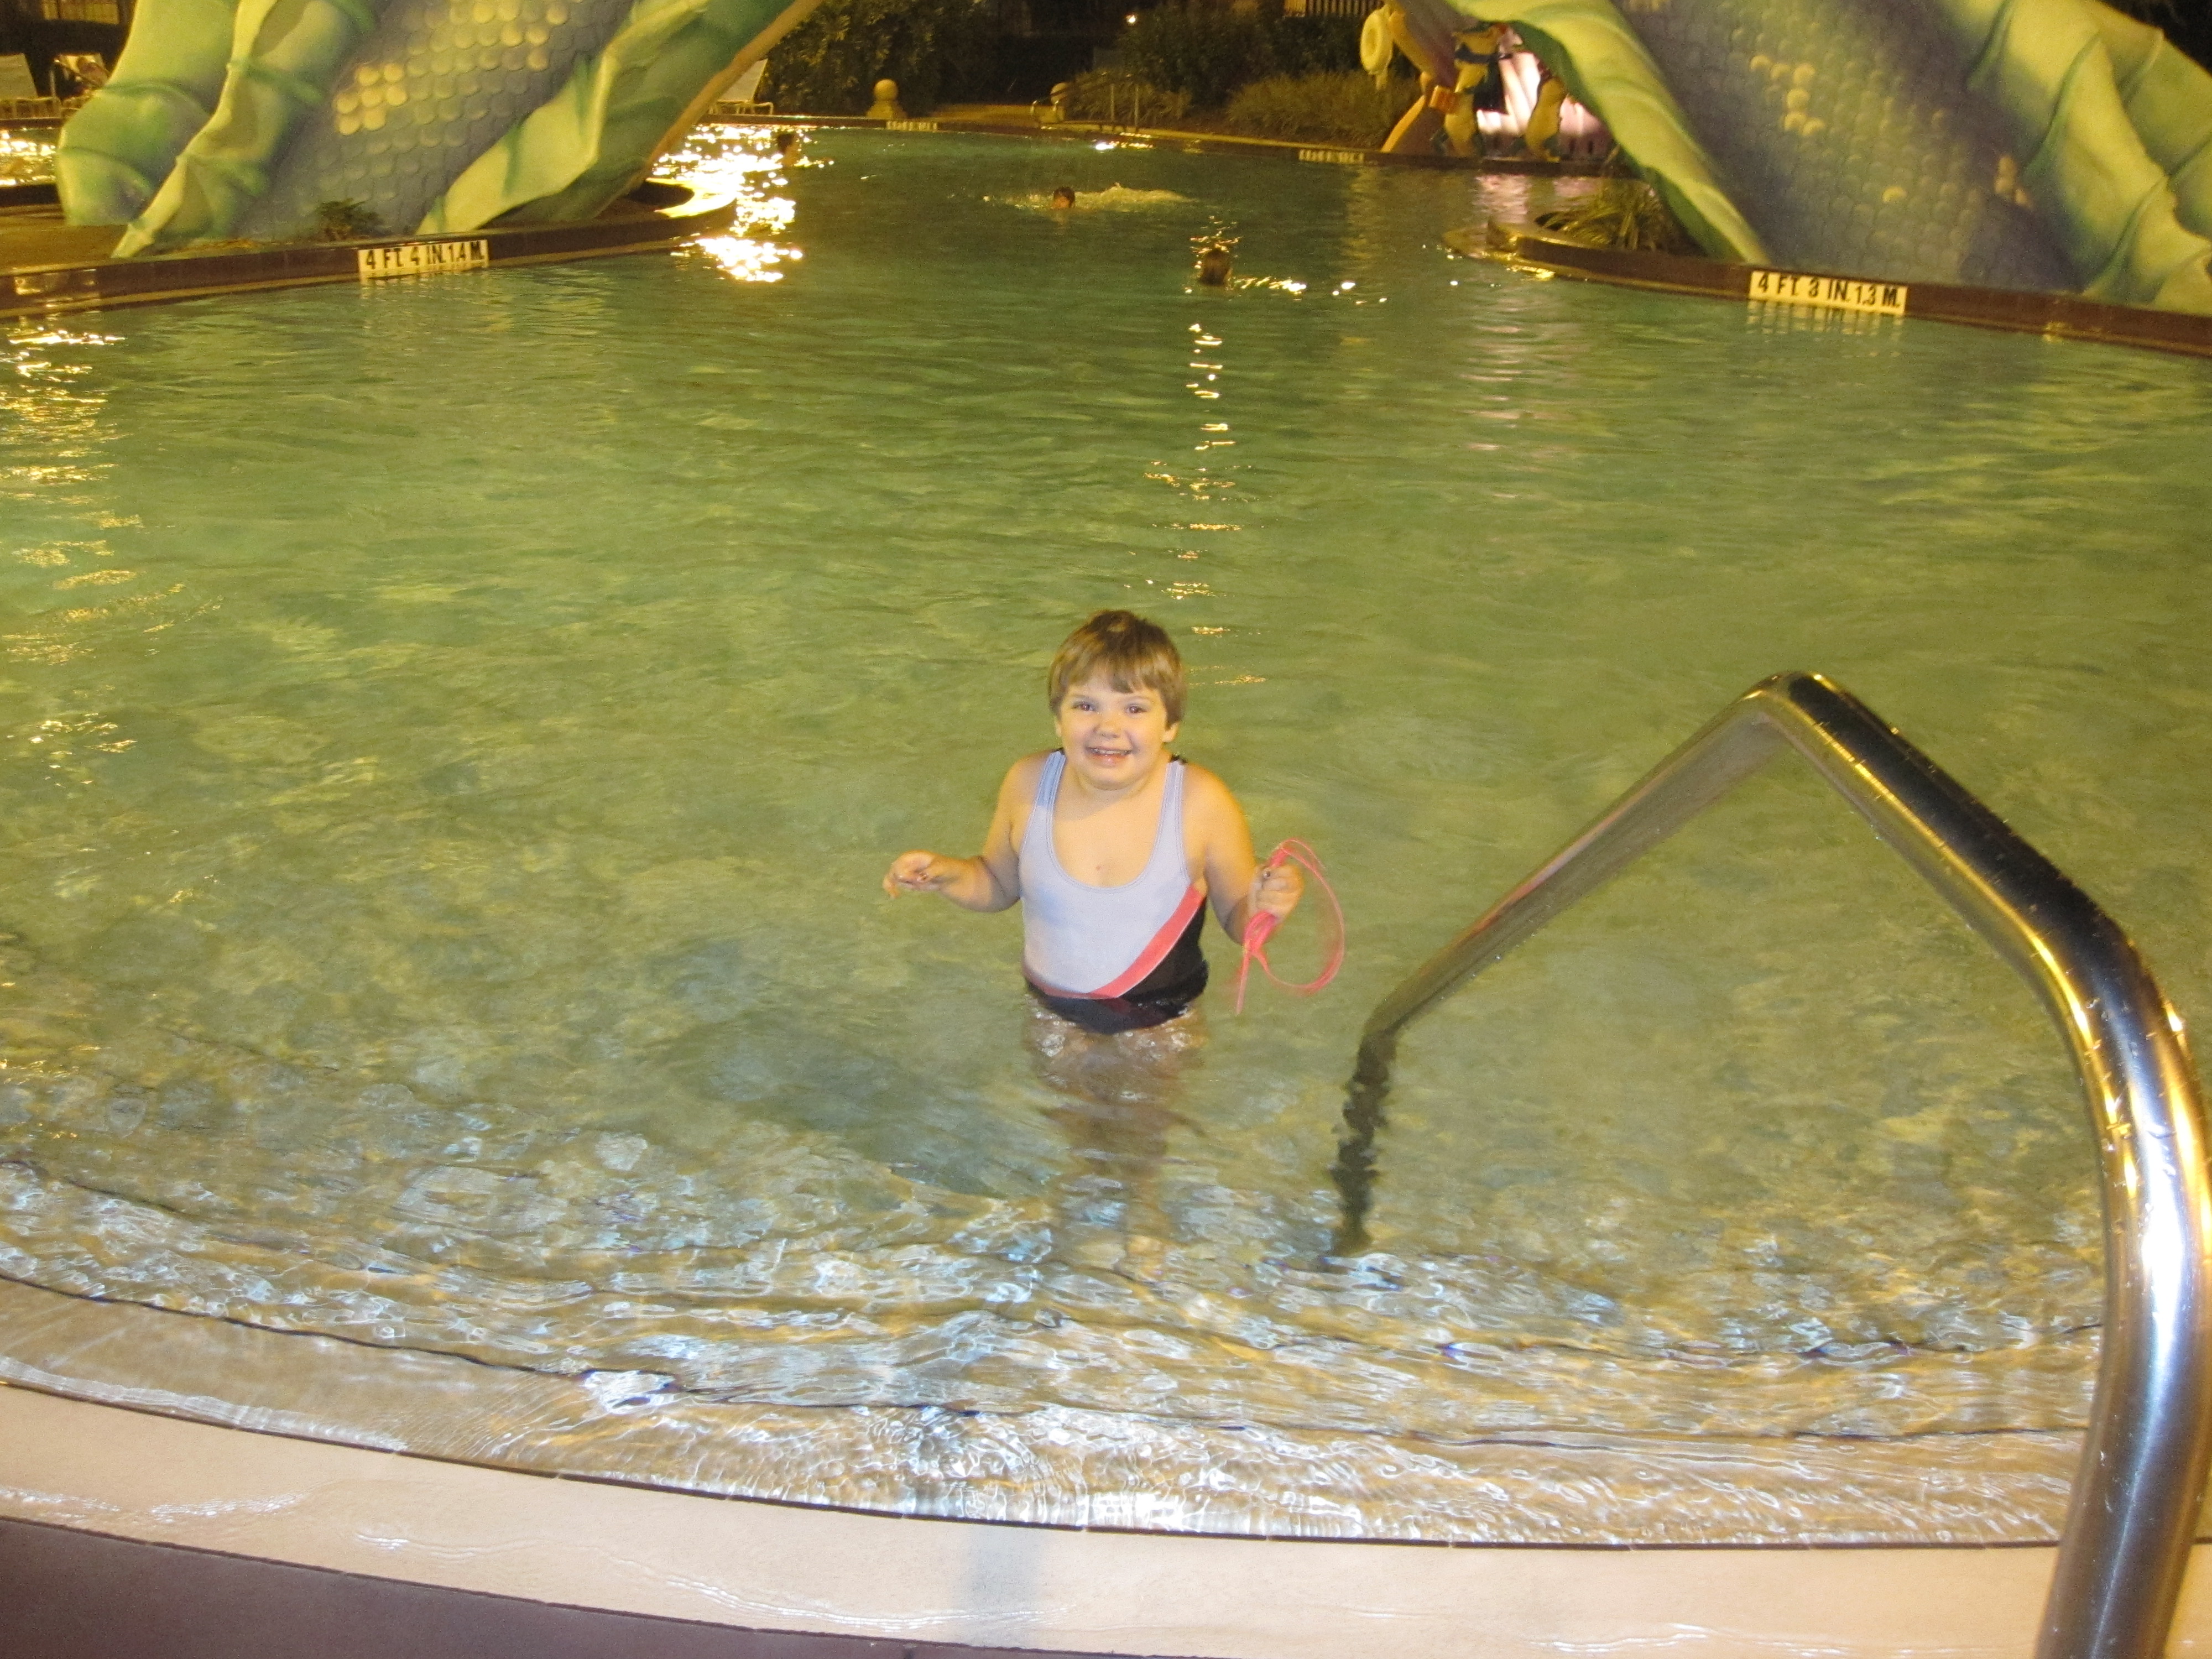 Emily lovin' the pool!